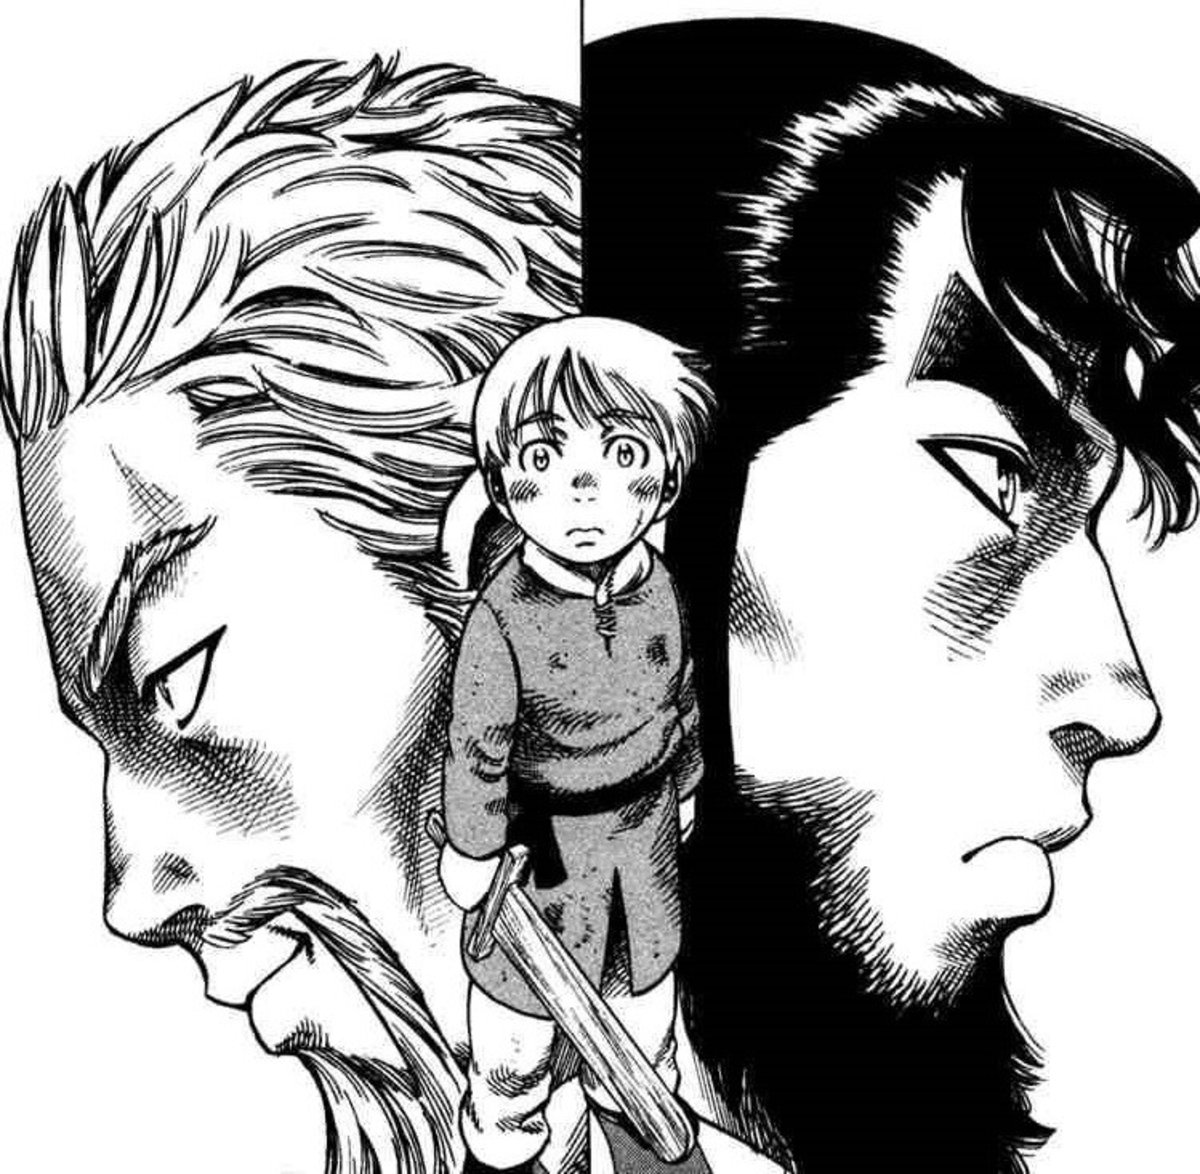 No Solo Gaming: Reseñamos Vinland Saga, el imprescindible Manga de vikingos de Makoto Yukimura